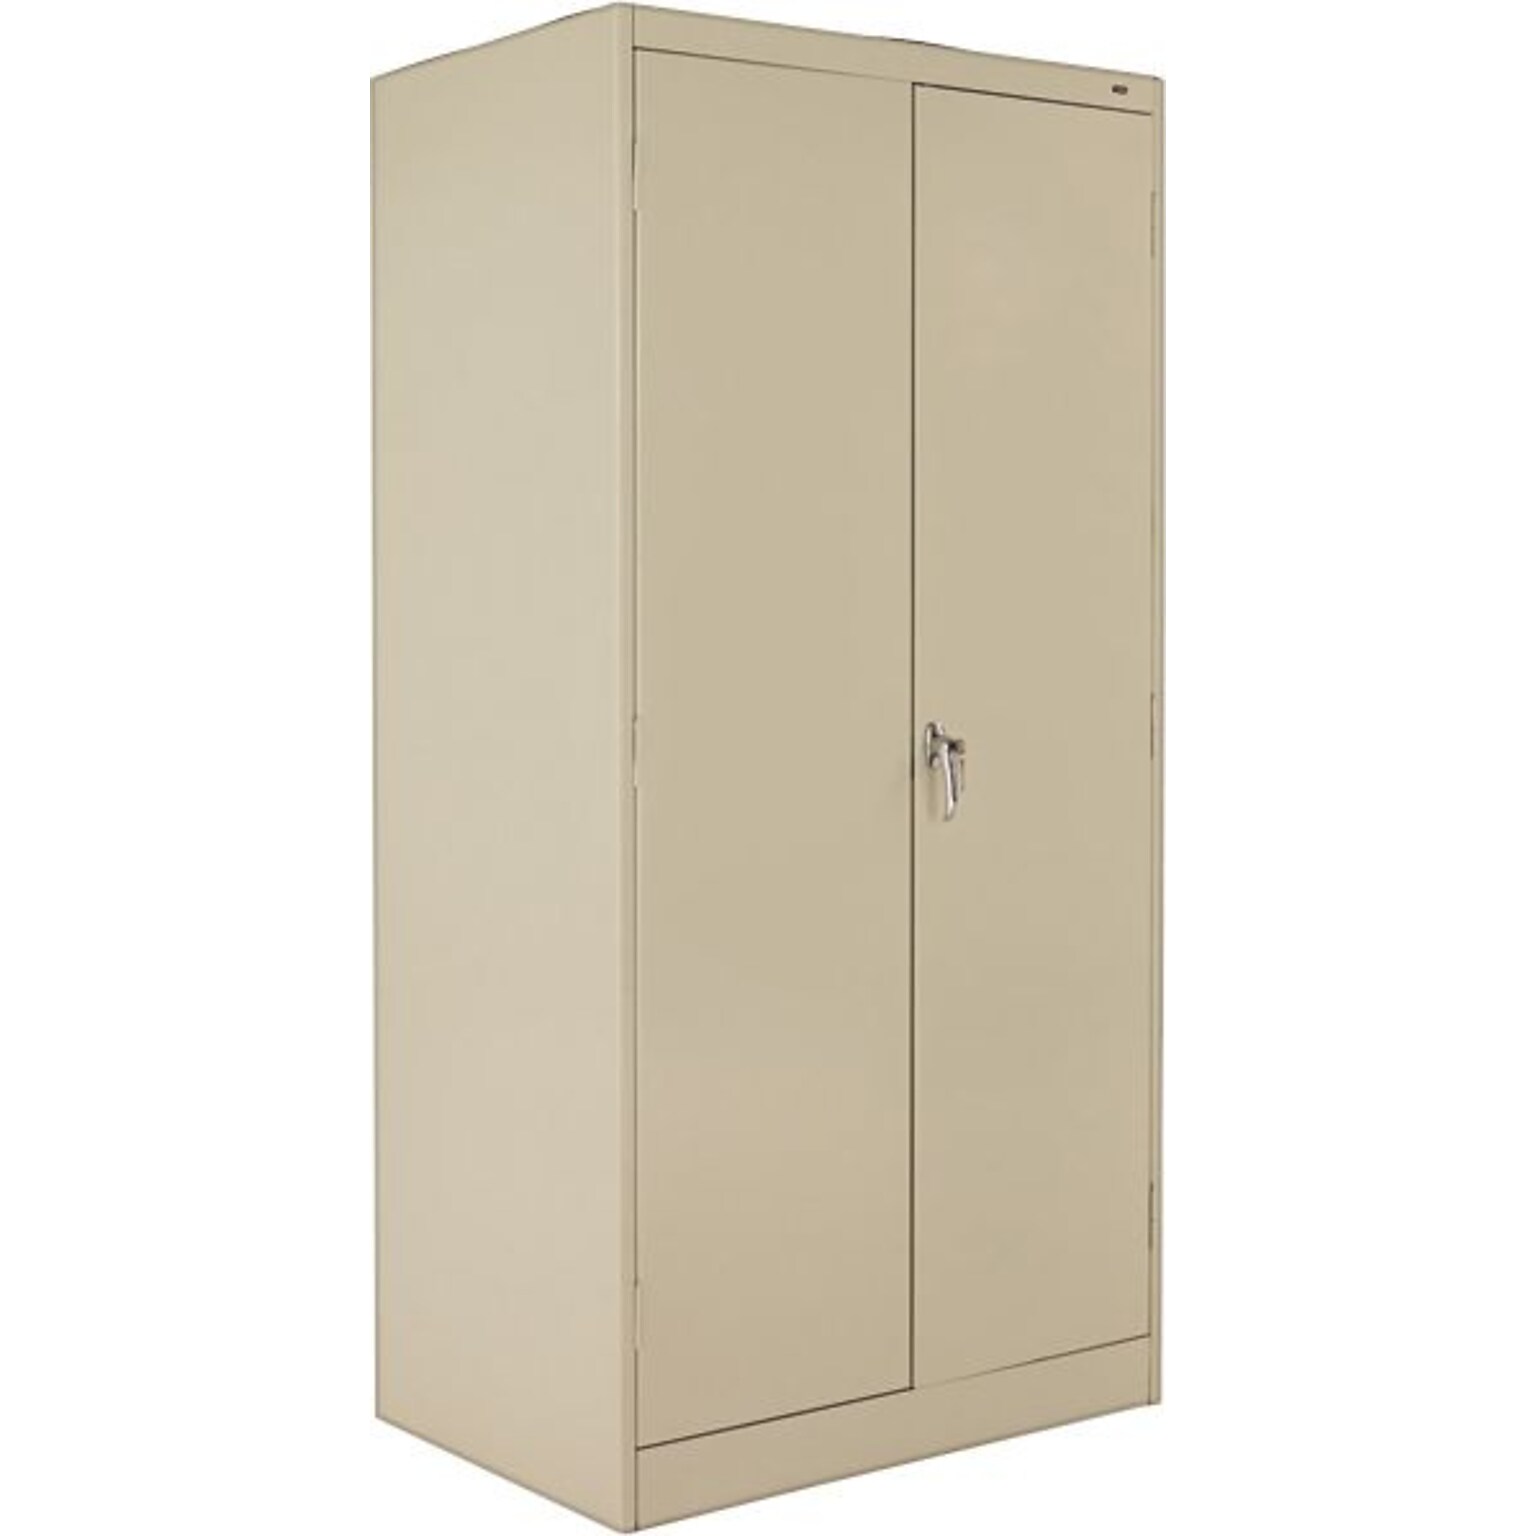 Tennsco Standard 72 Steel 4 Shelf Storage Cabinet, Putty (TNN1480PY)